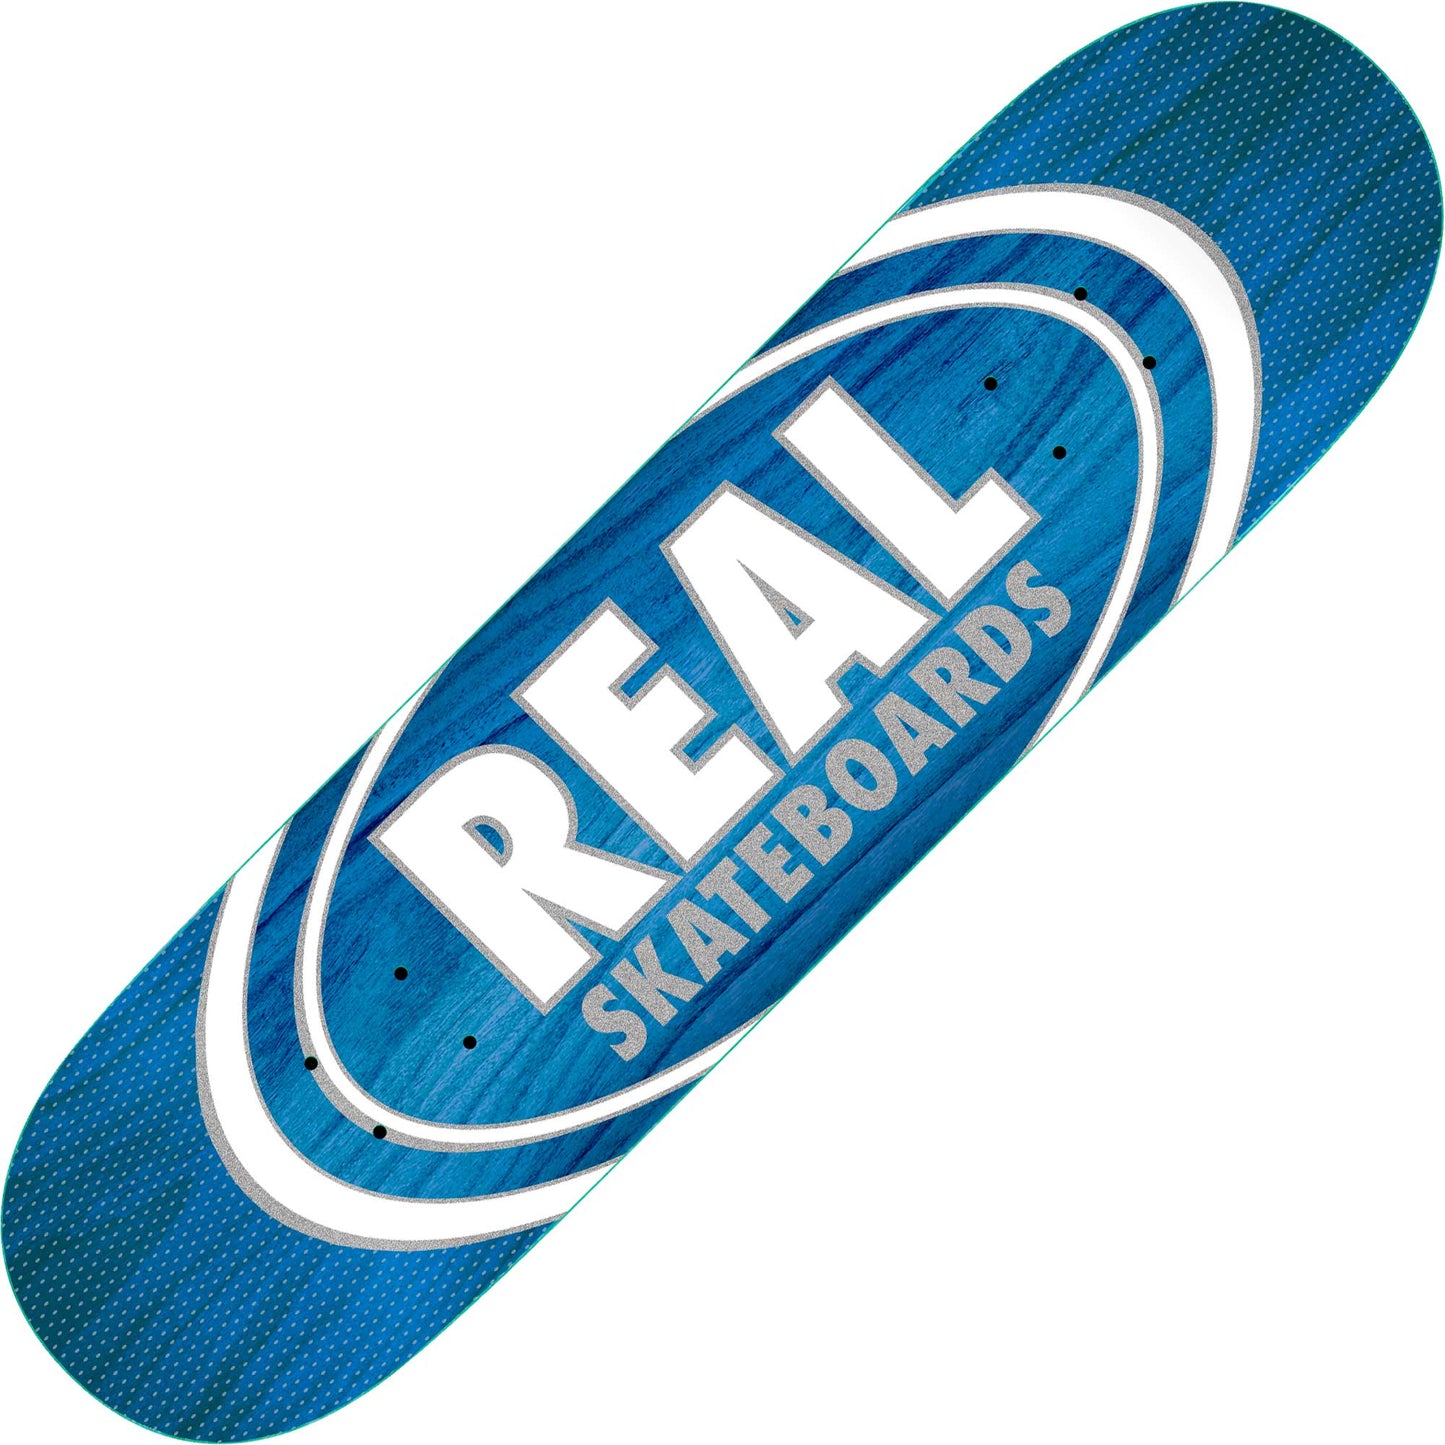 Real Oval Patterns Team series deck (8.75") - Tiki Room Skateboards - 1